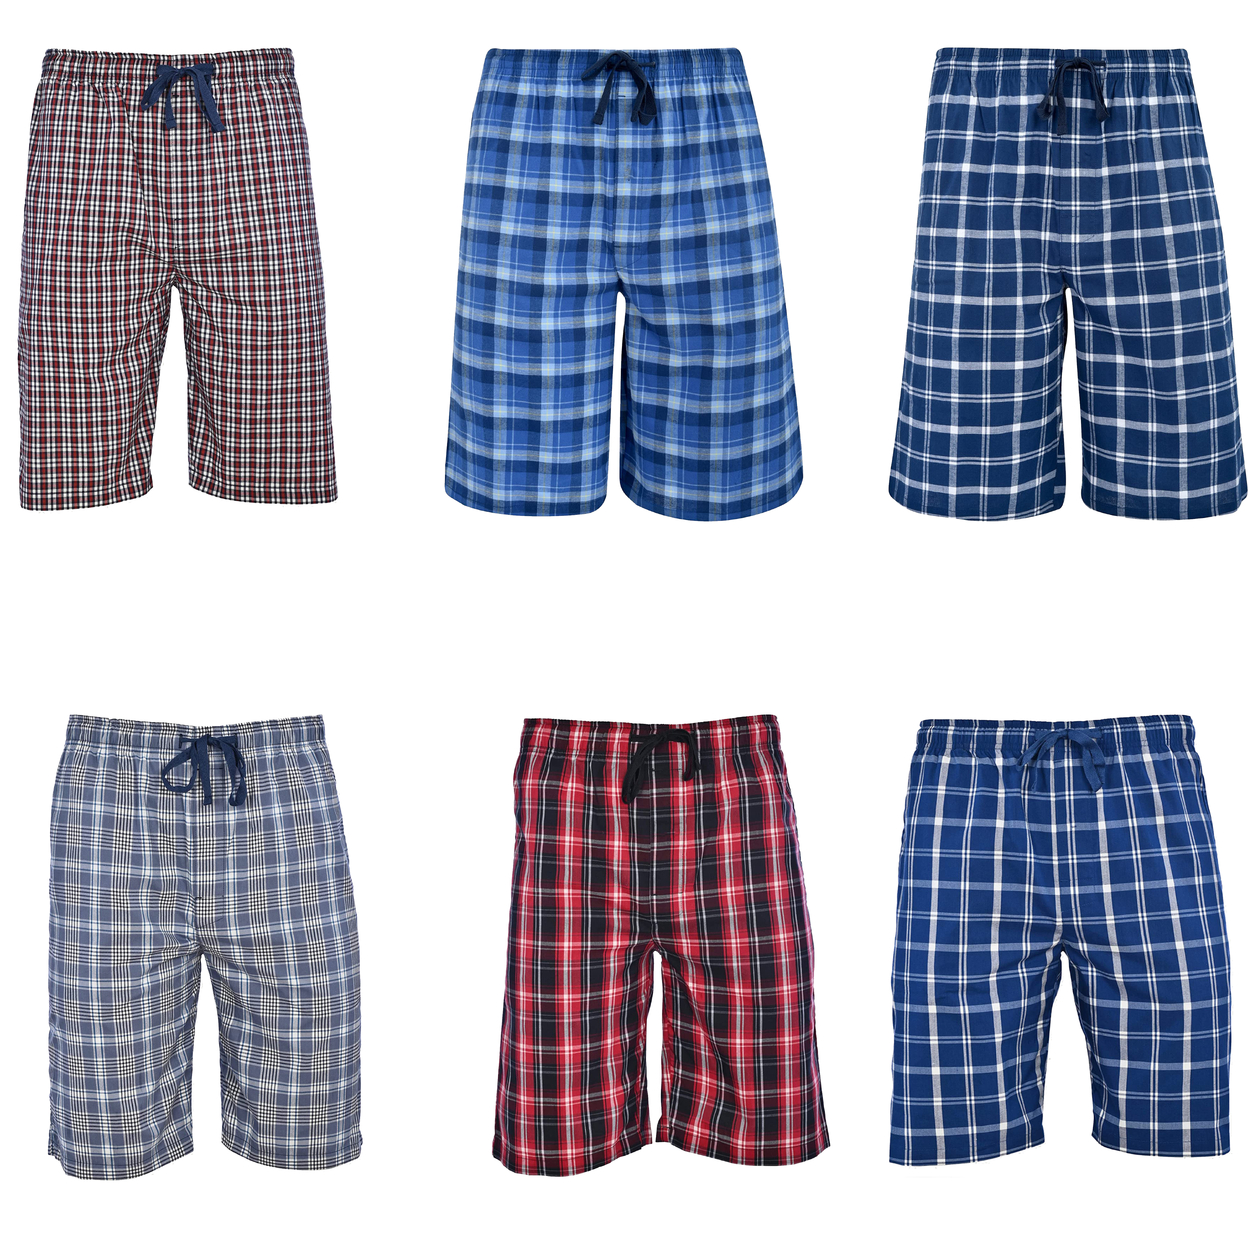 2-Pack: Men's Ultra Soft Plaid Lounge Pajama Sleep Wear Shorts - Grey & Grey, Medium